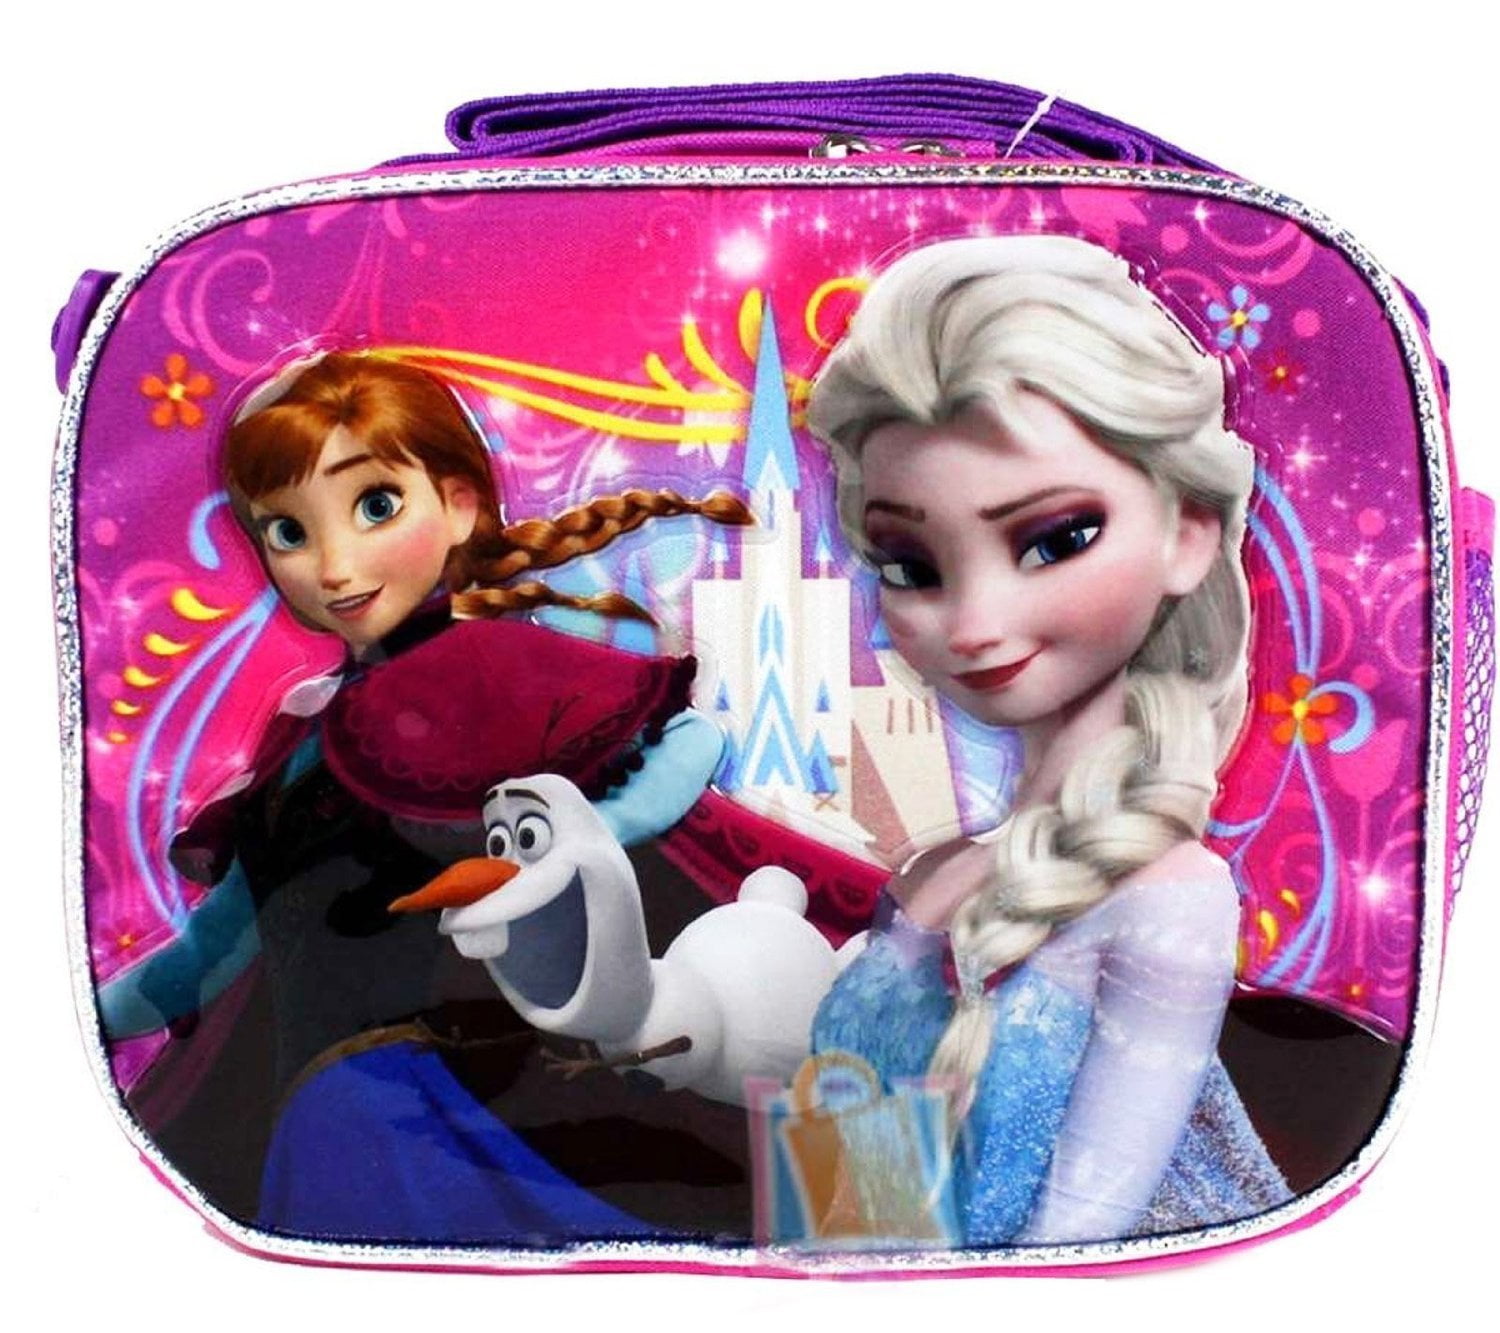 Disney Frozen - Princess Beauty Single Layer Lunch Bag